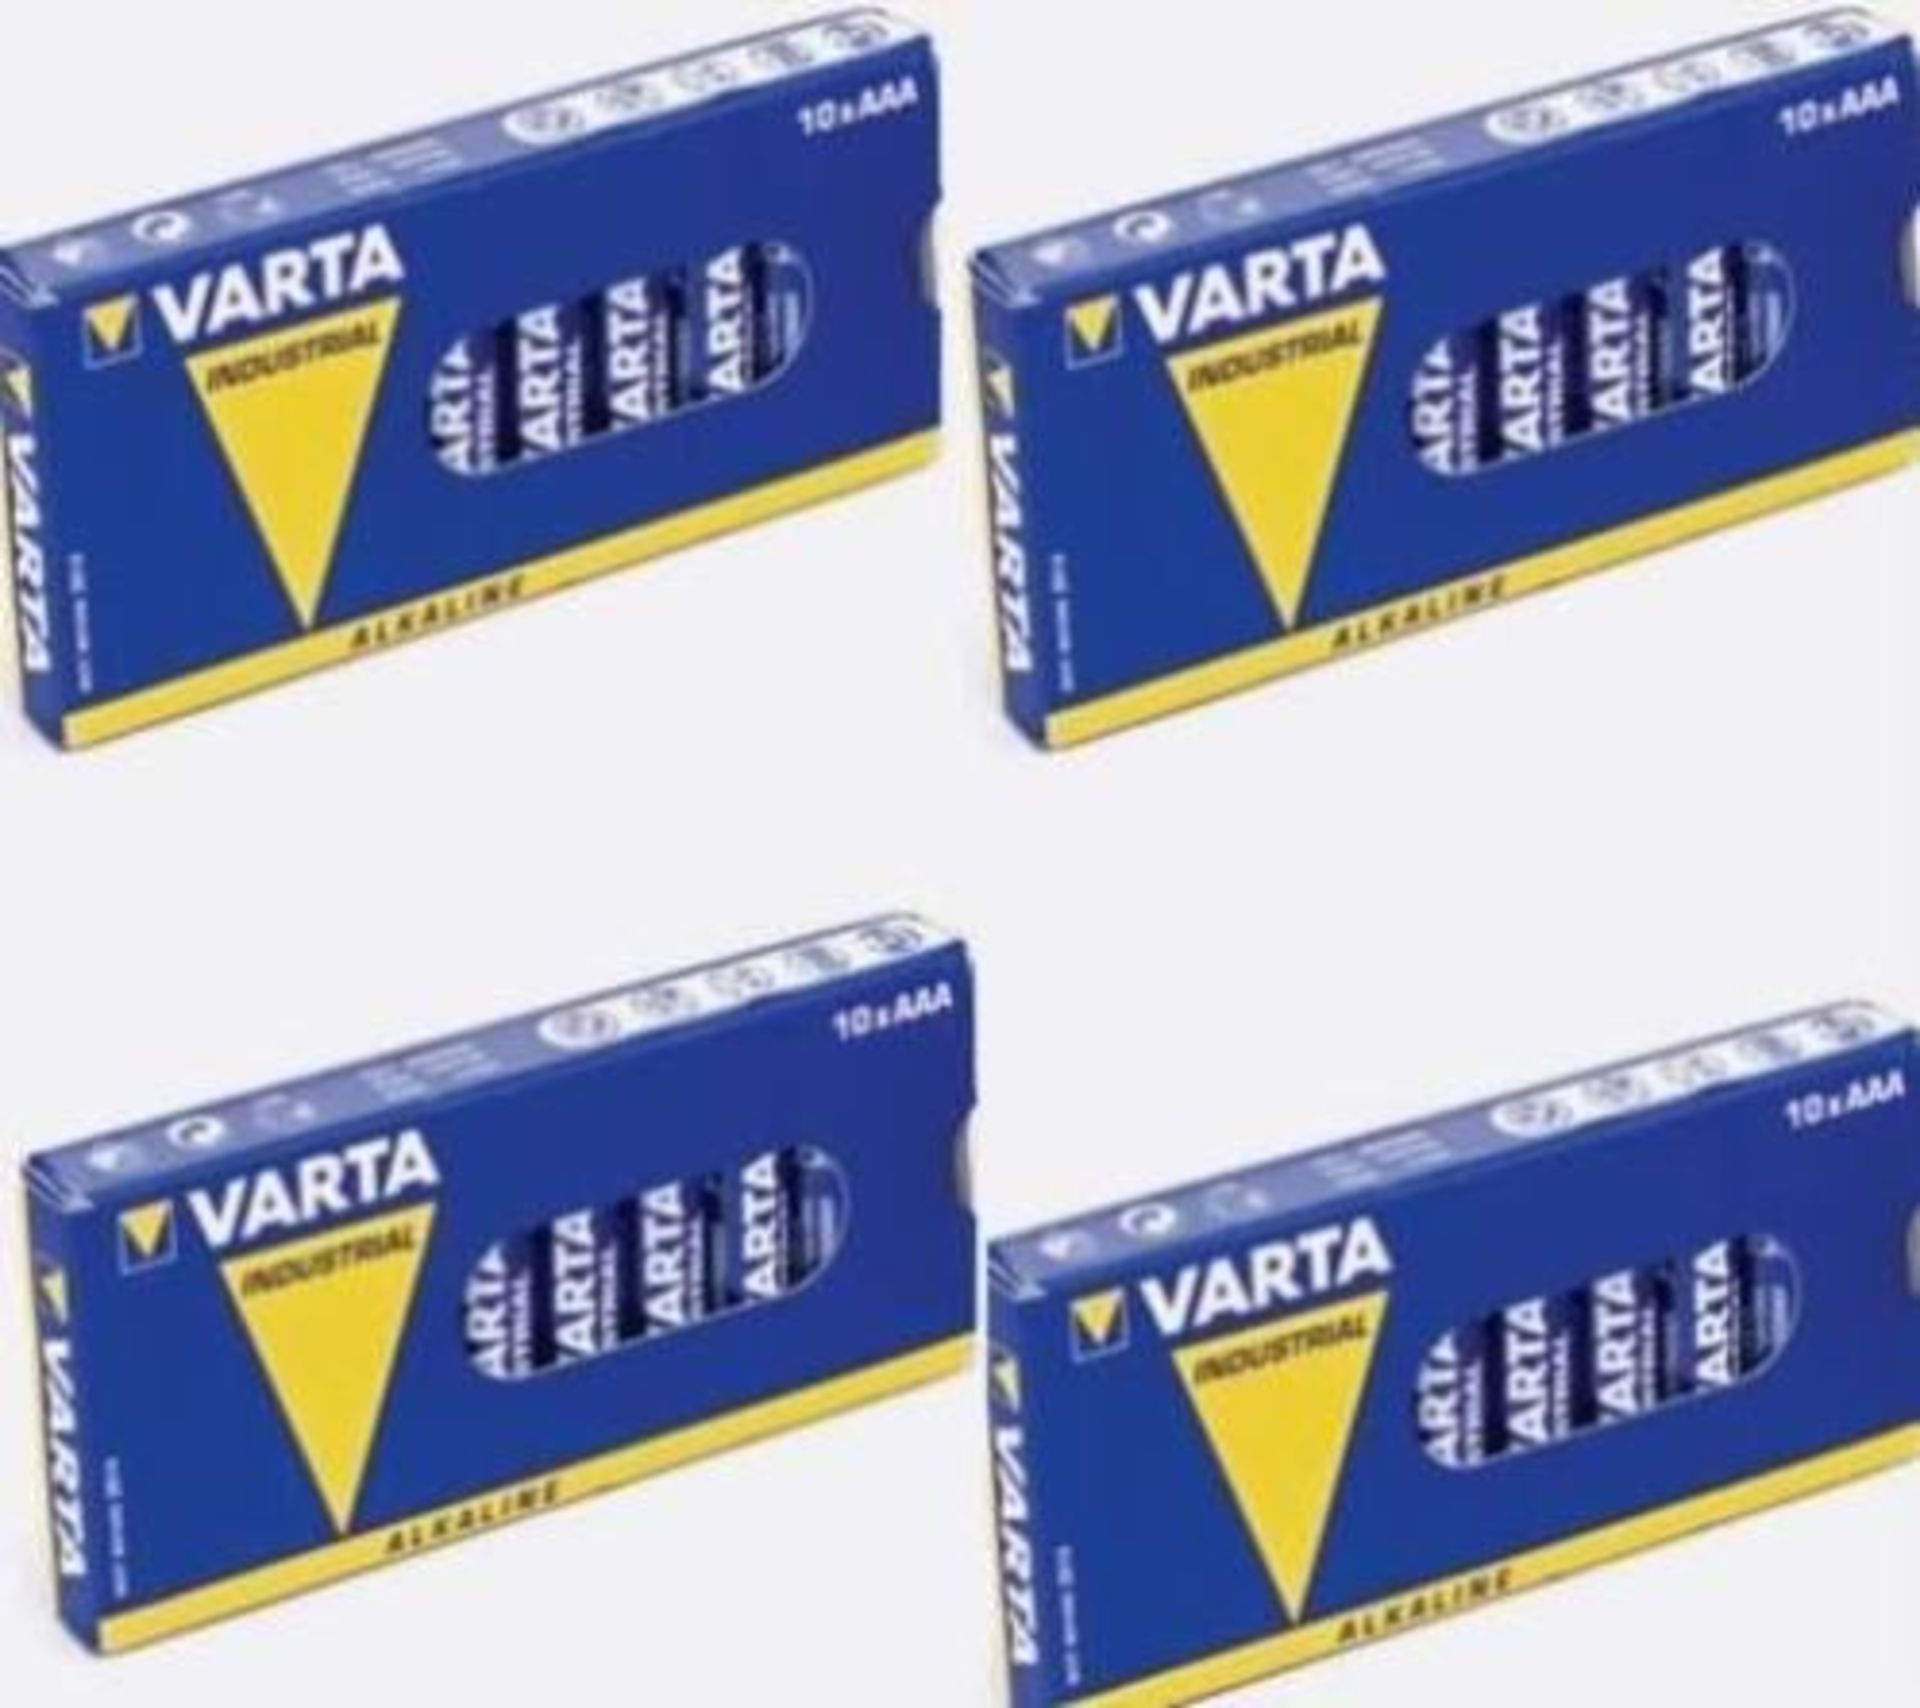 V 4 Packs of Ten (40) Varta Industrial Strength Alkaline AAA Batteries (Made In Germany)       #